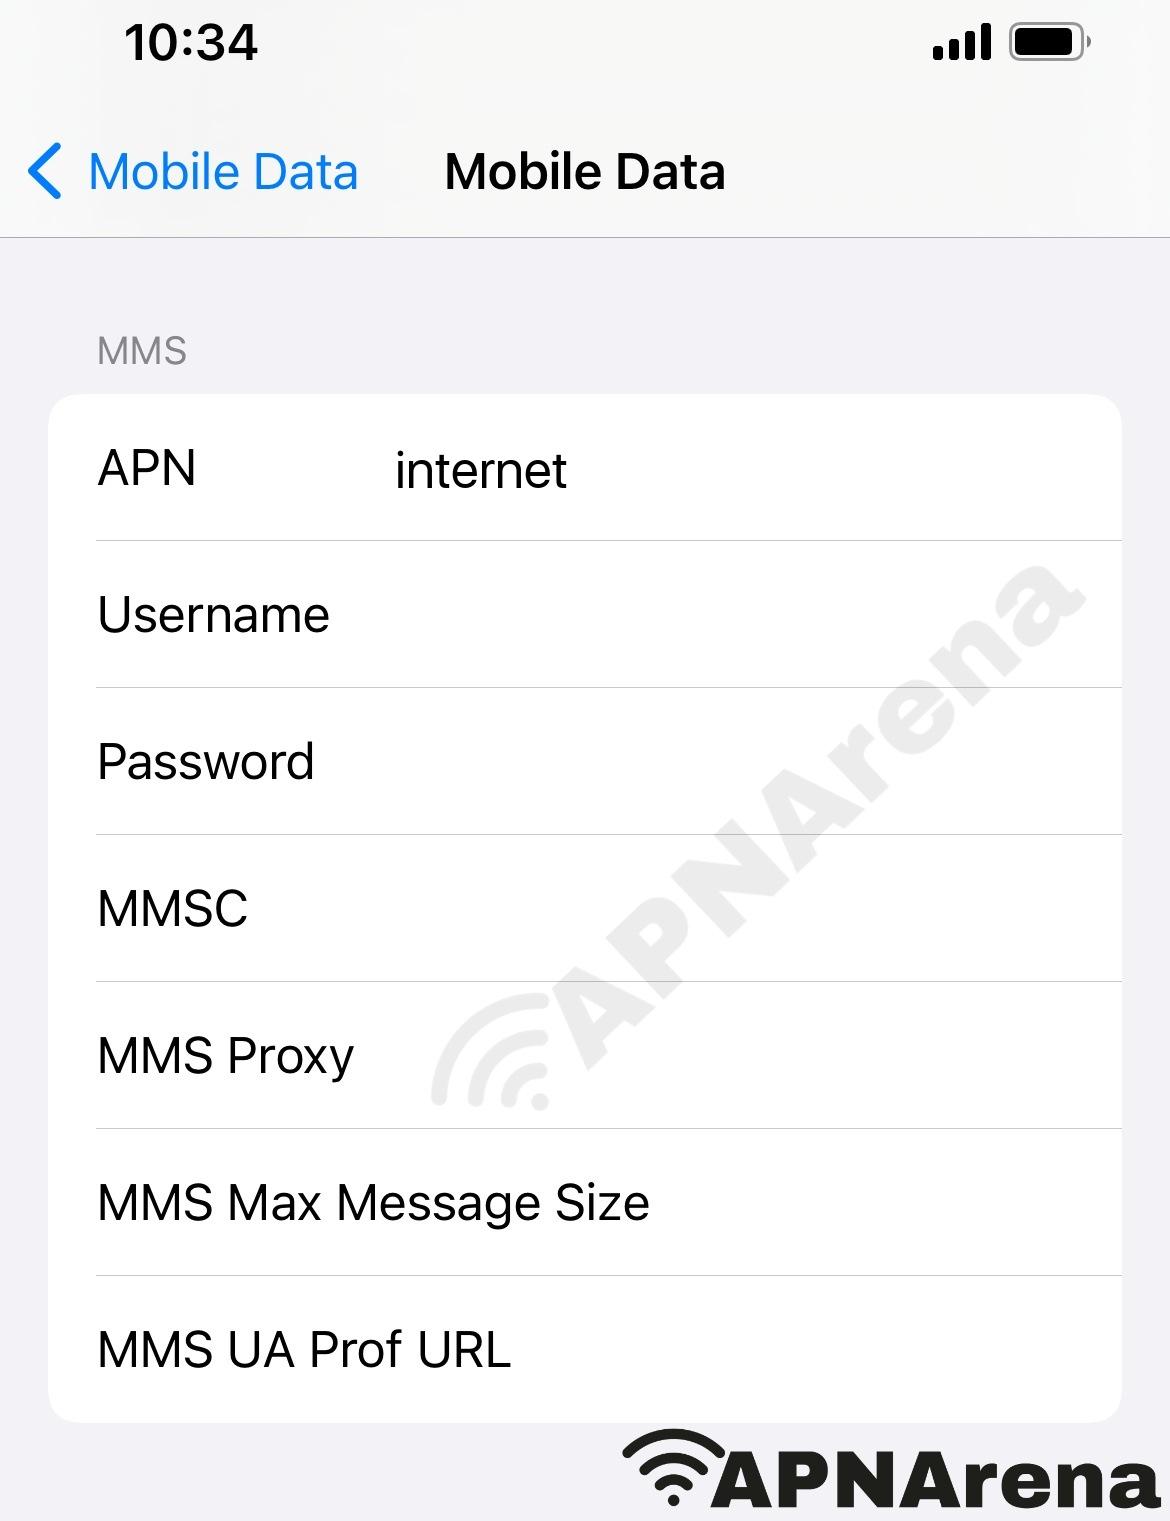 A1 Bulgaria (Mtel, Mobiltel) MMS Settings for iPhone